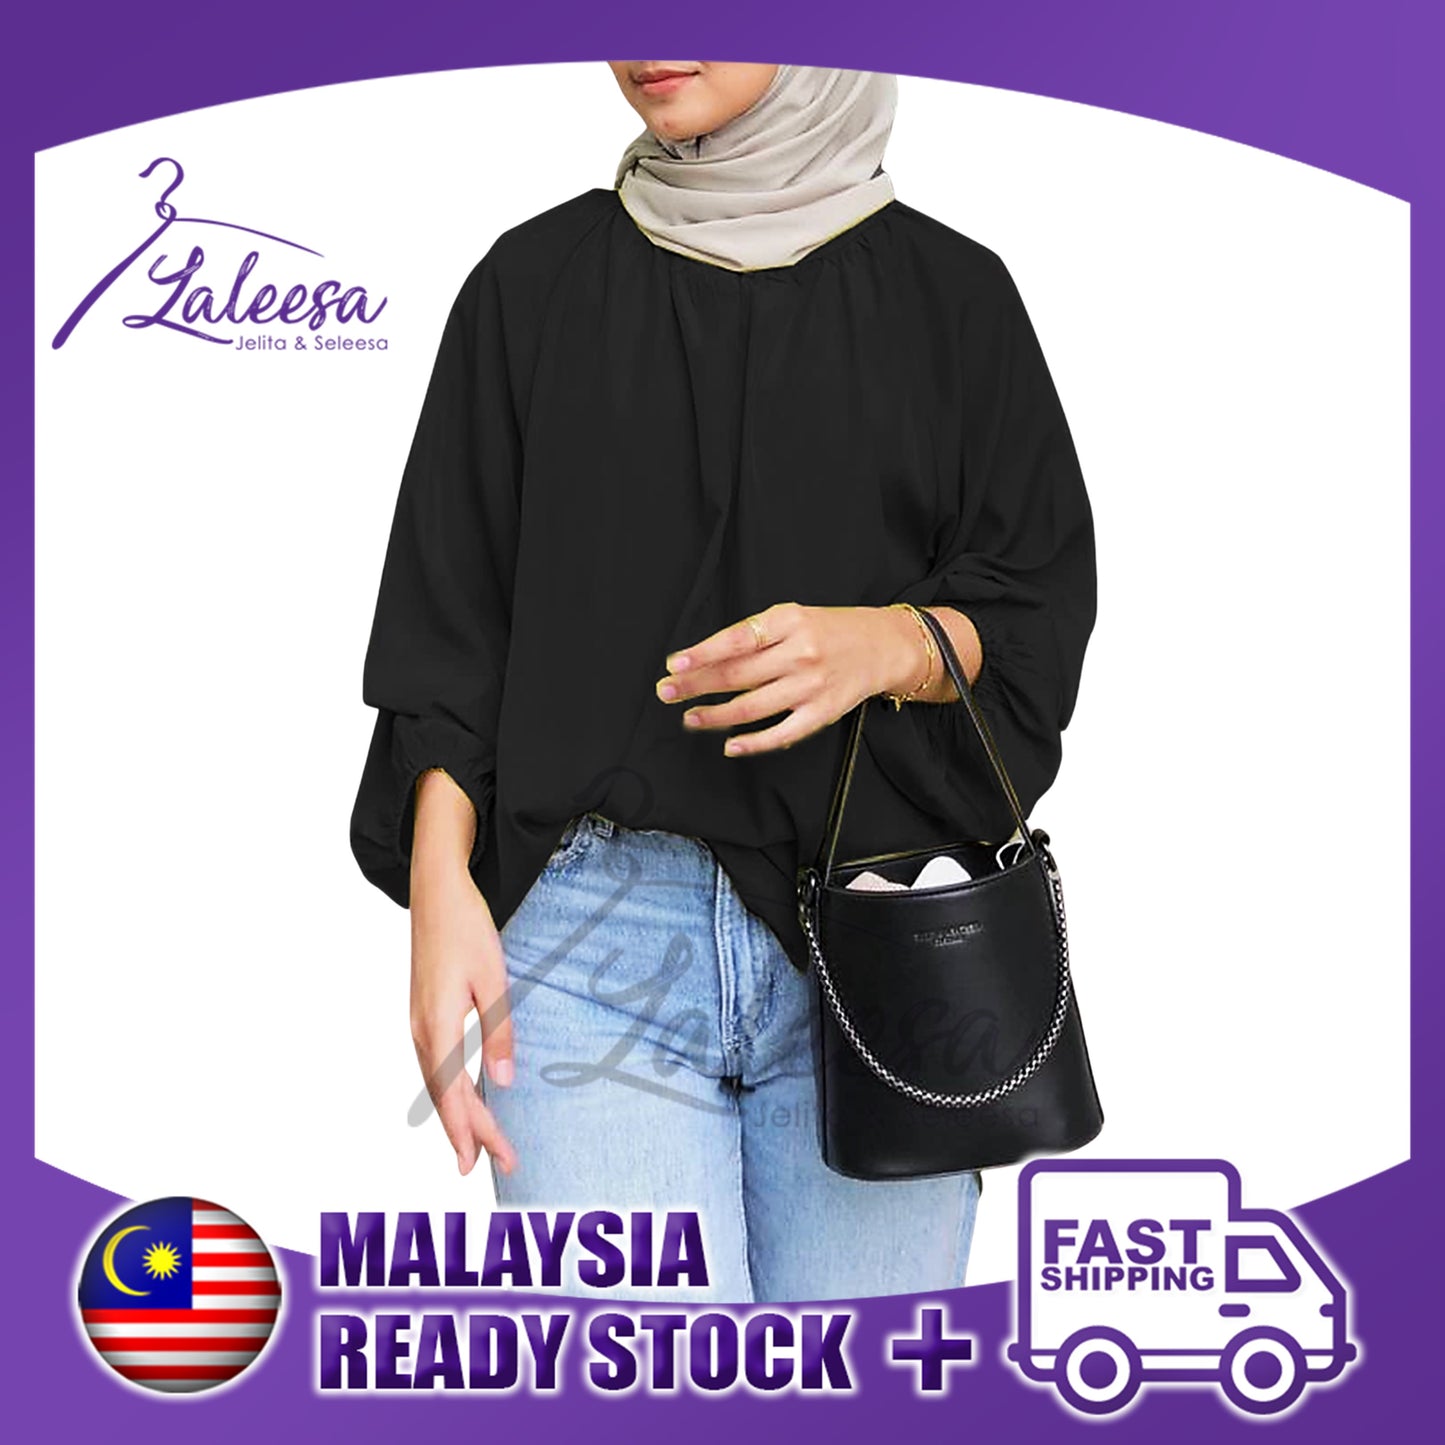 LALEESA TB465495 BLOUSE GHAZIYA Elastic Cuff Solid Blouse Muslimah Blouse Women Blouse Baju Muslimah Baju Perempuan